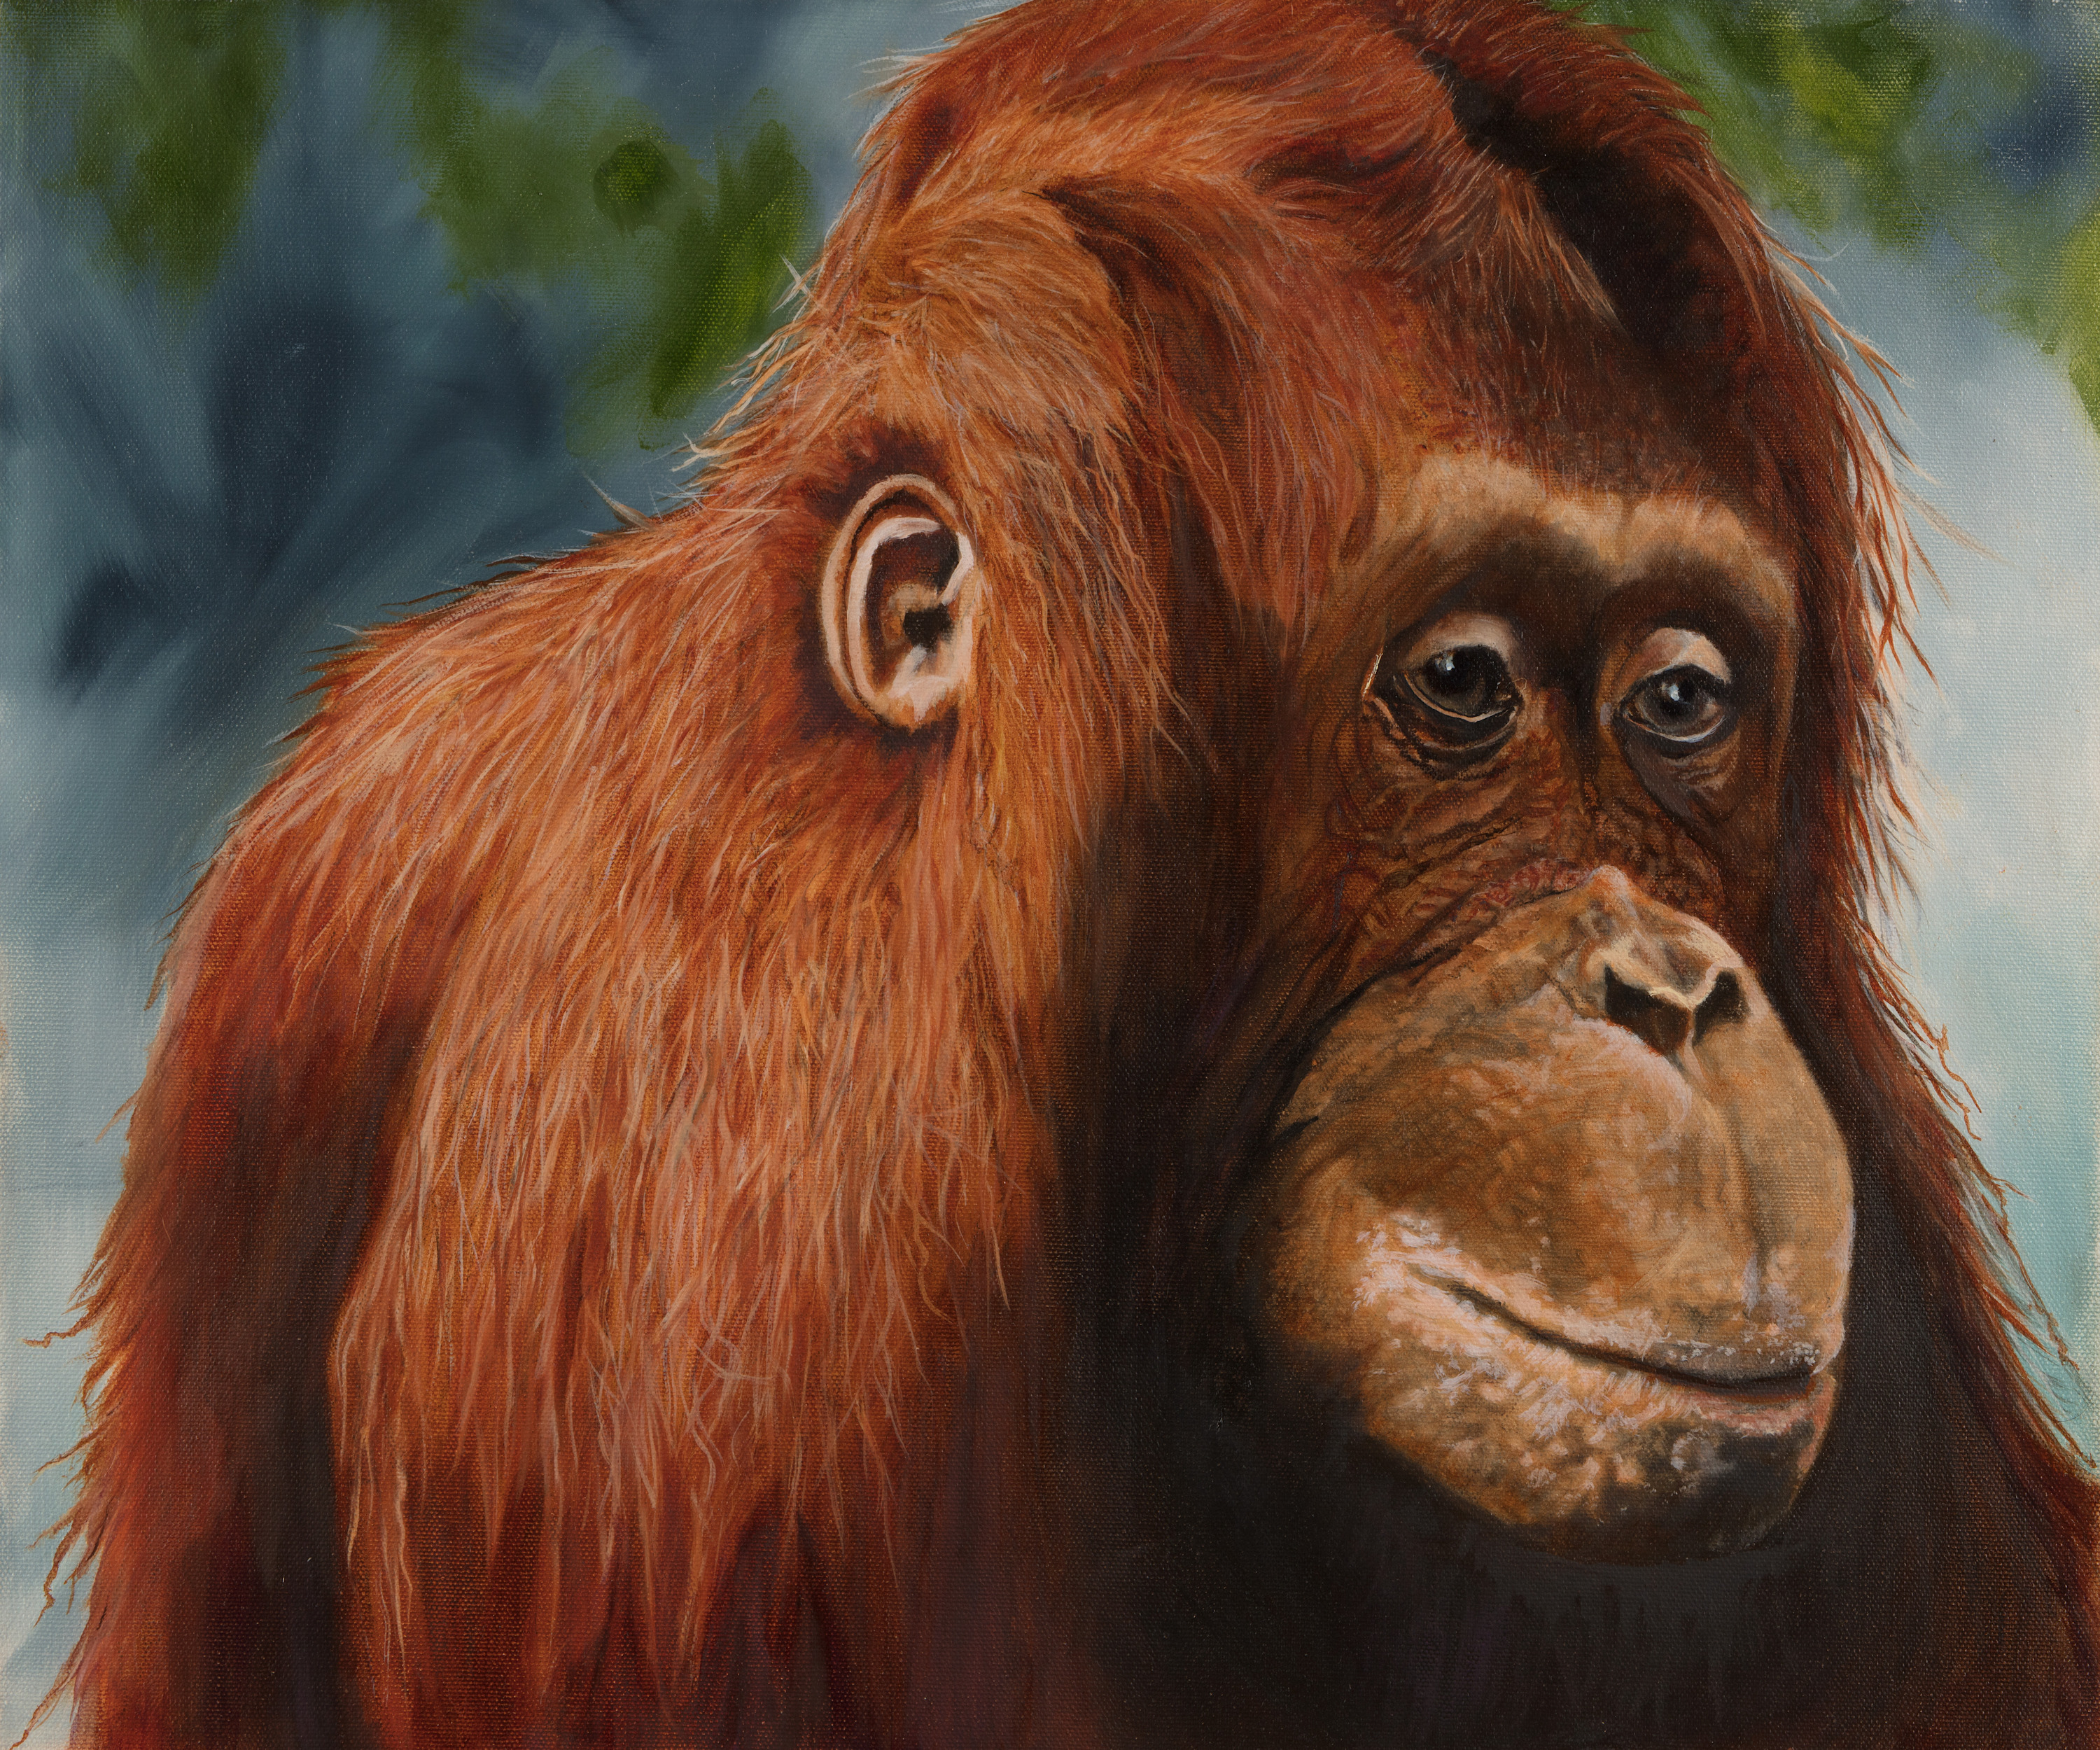 Orangutang princess pgletk